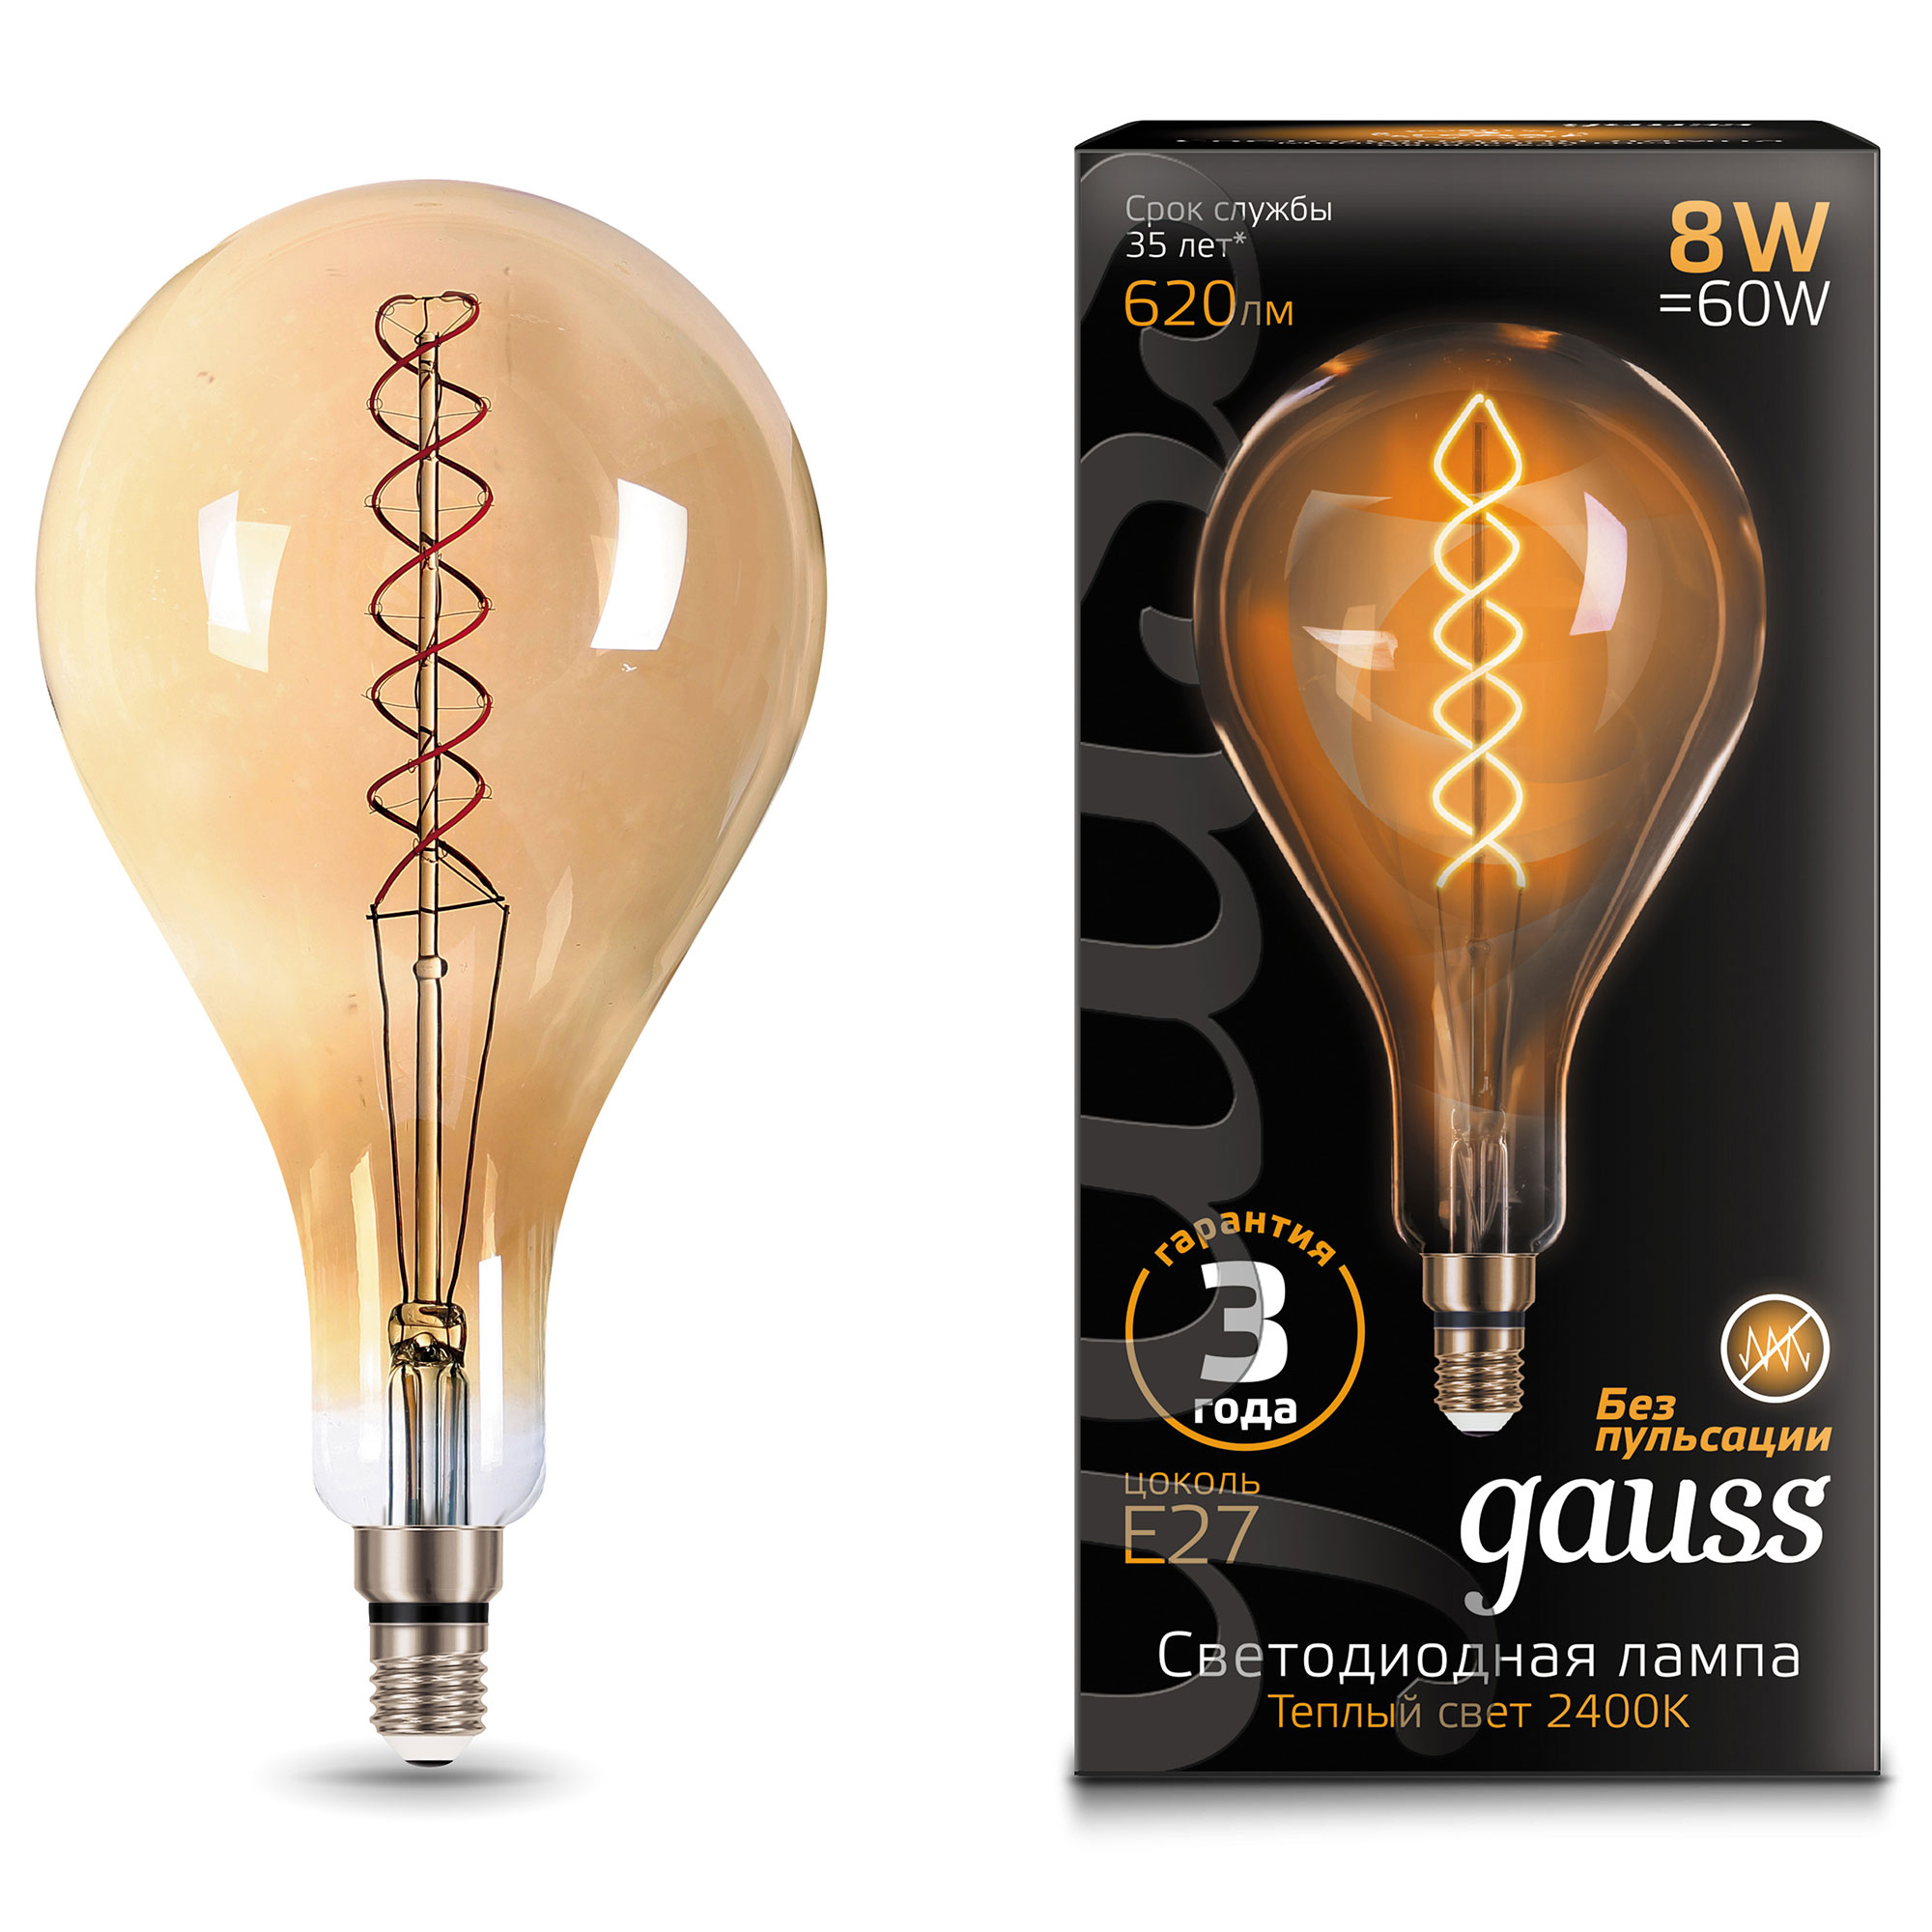 лампа gauss filament flexible bd160 8w 2400к е27 Лампа gauss flexible a160 8w e27 g 2400k